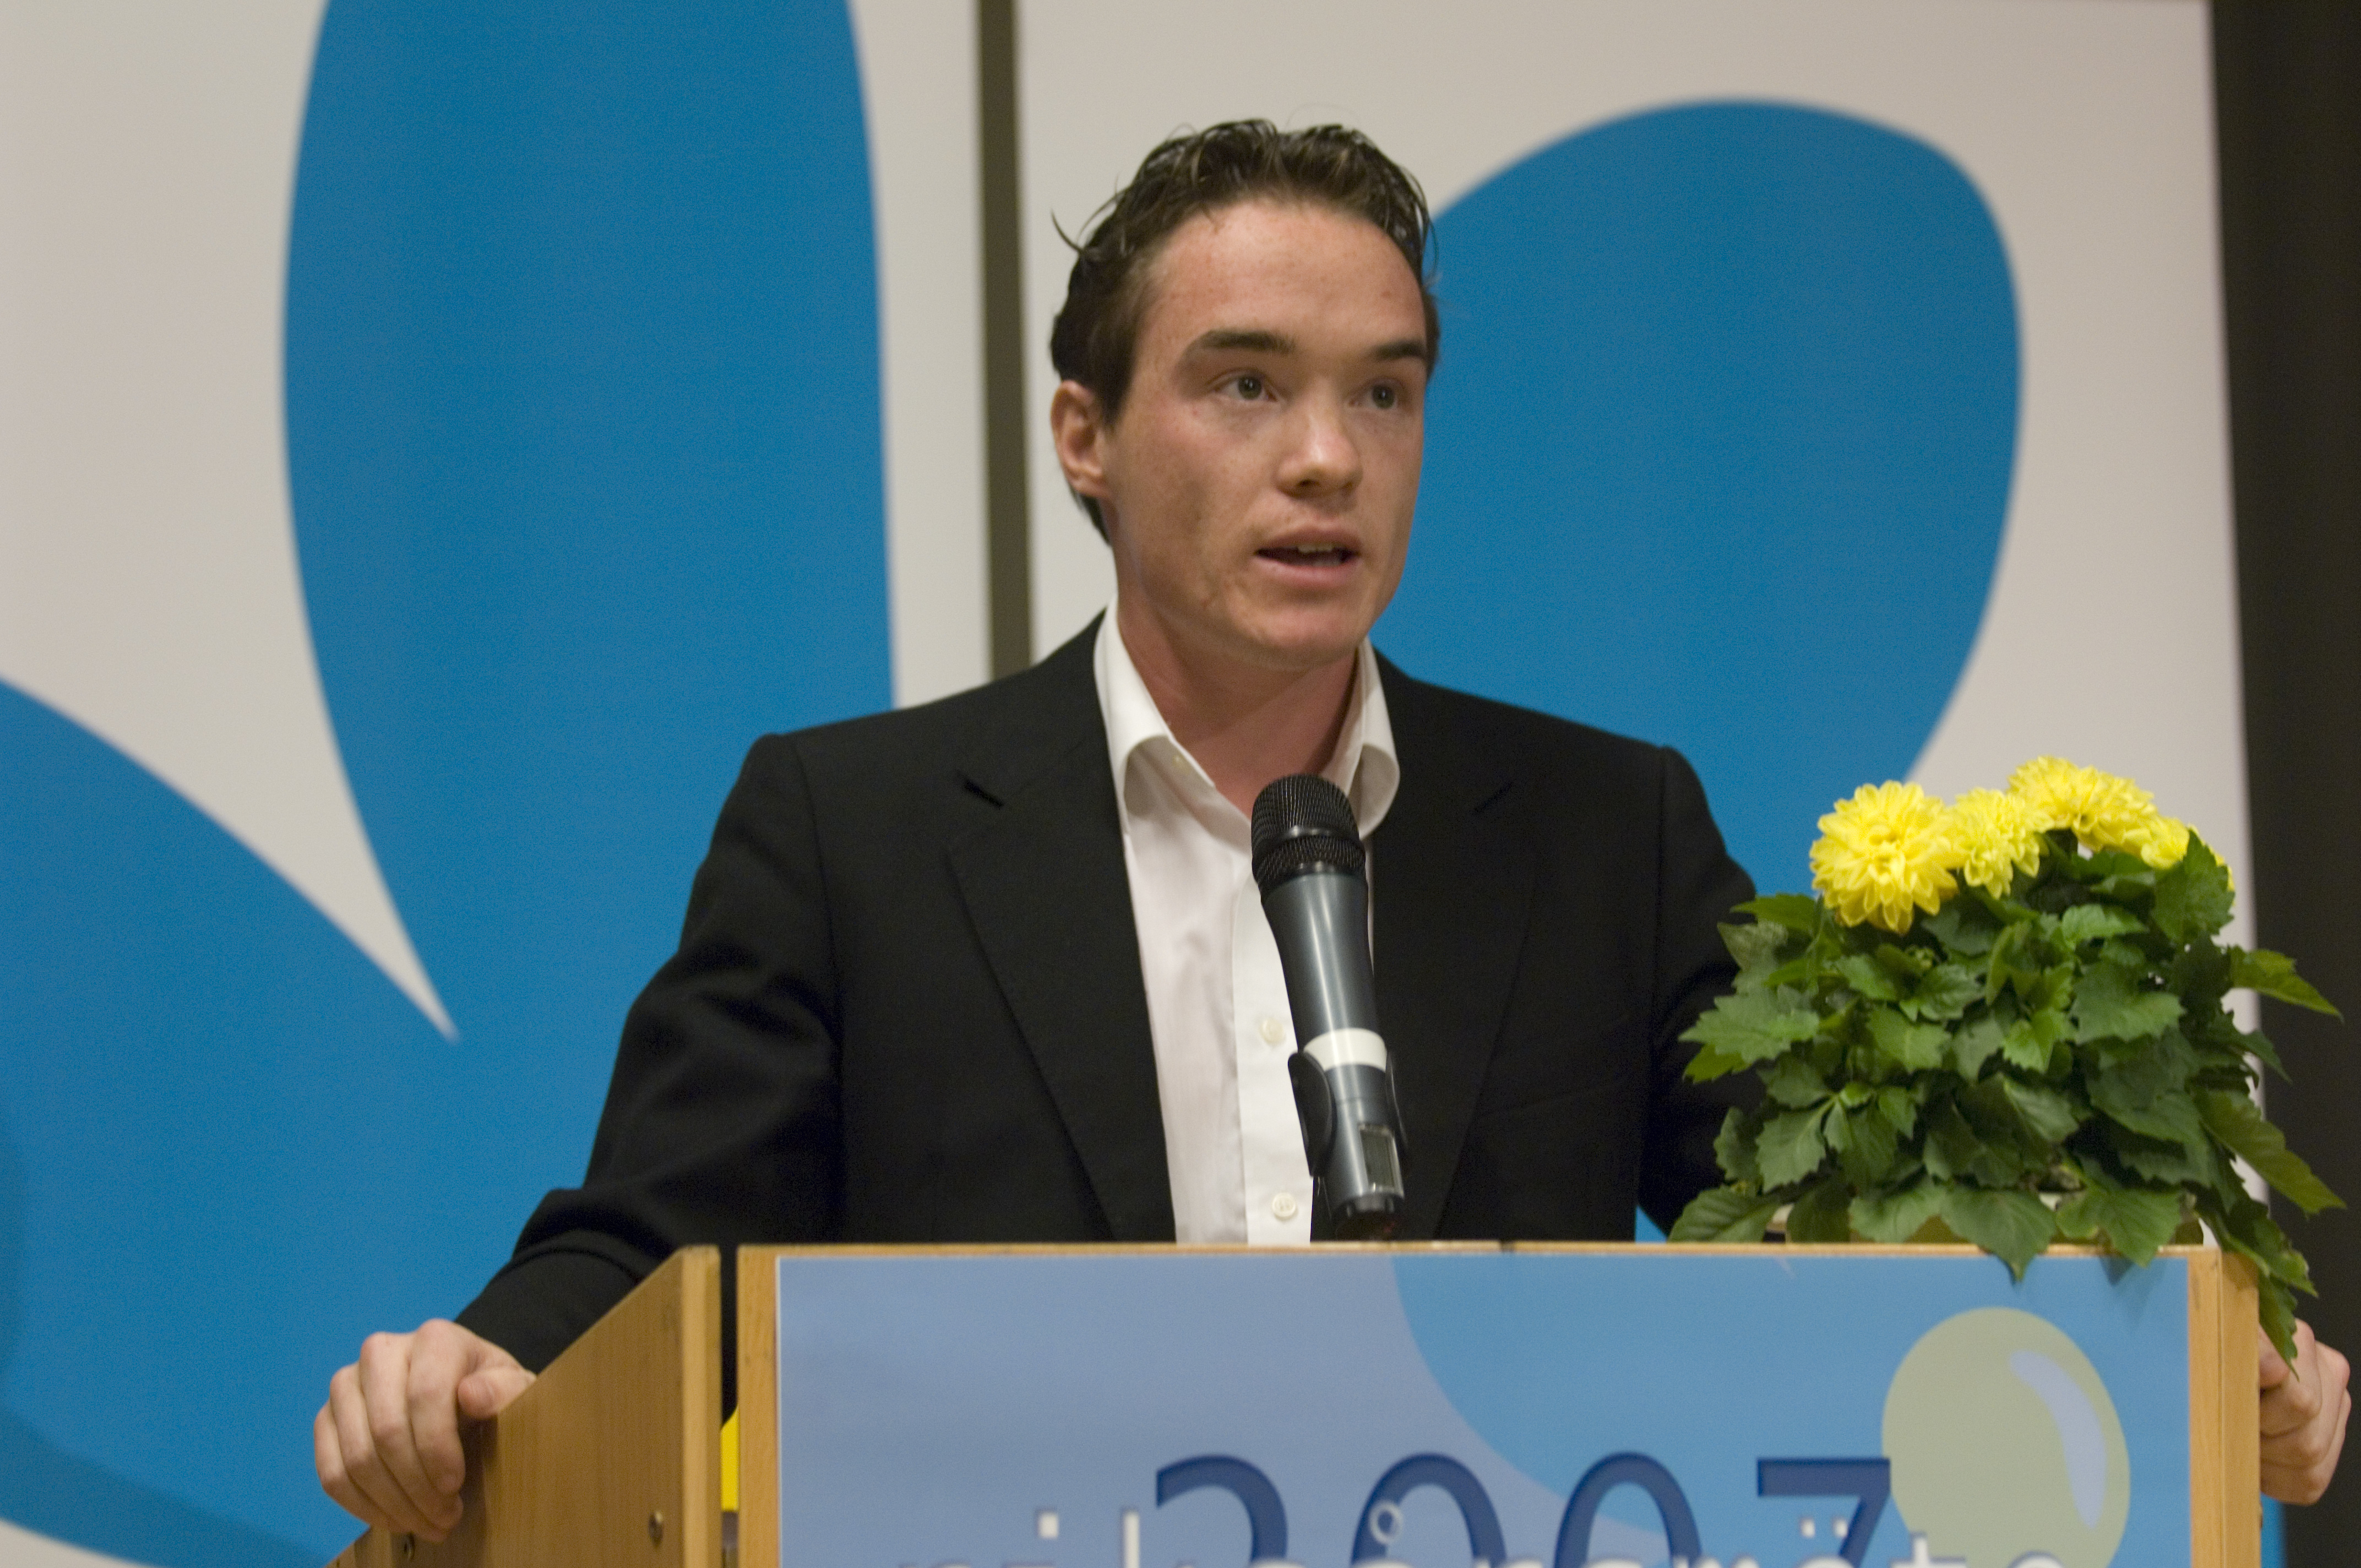 Riksdagsvalet 2010, Politik, Sverigedemokraterna, SMS-duellen, Kent Ekeroth